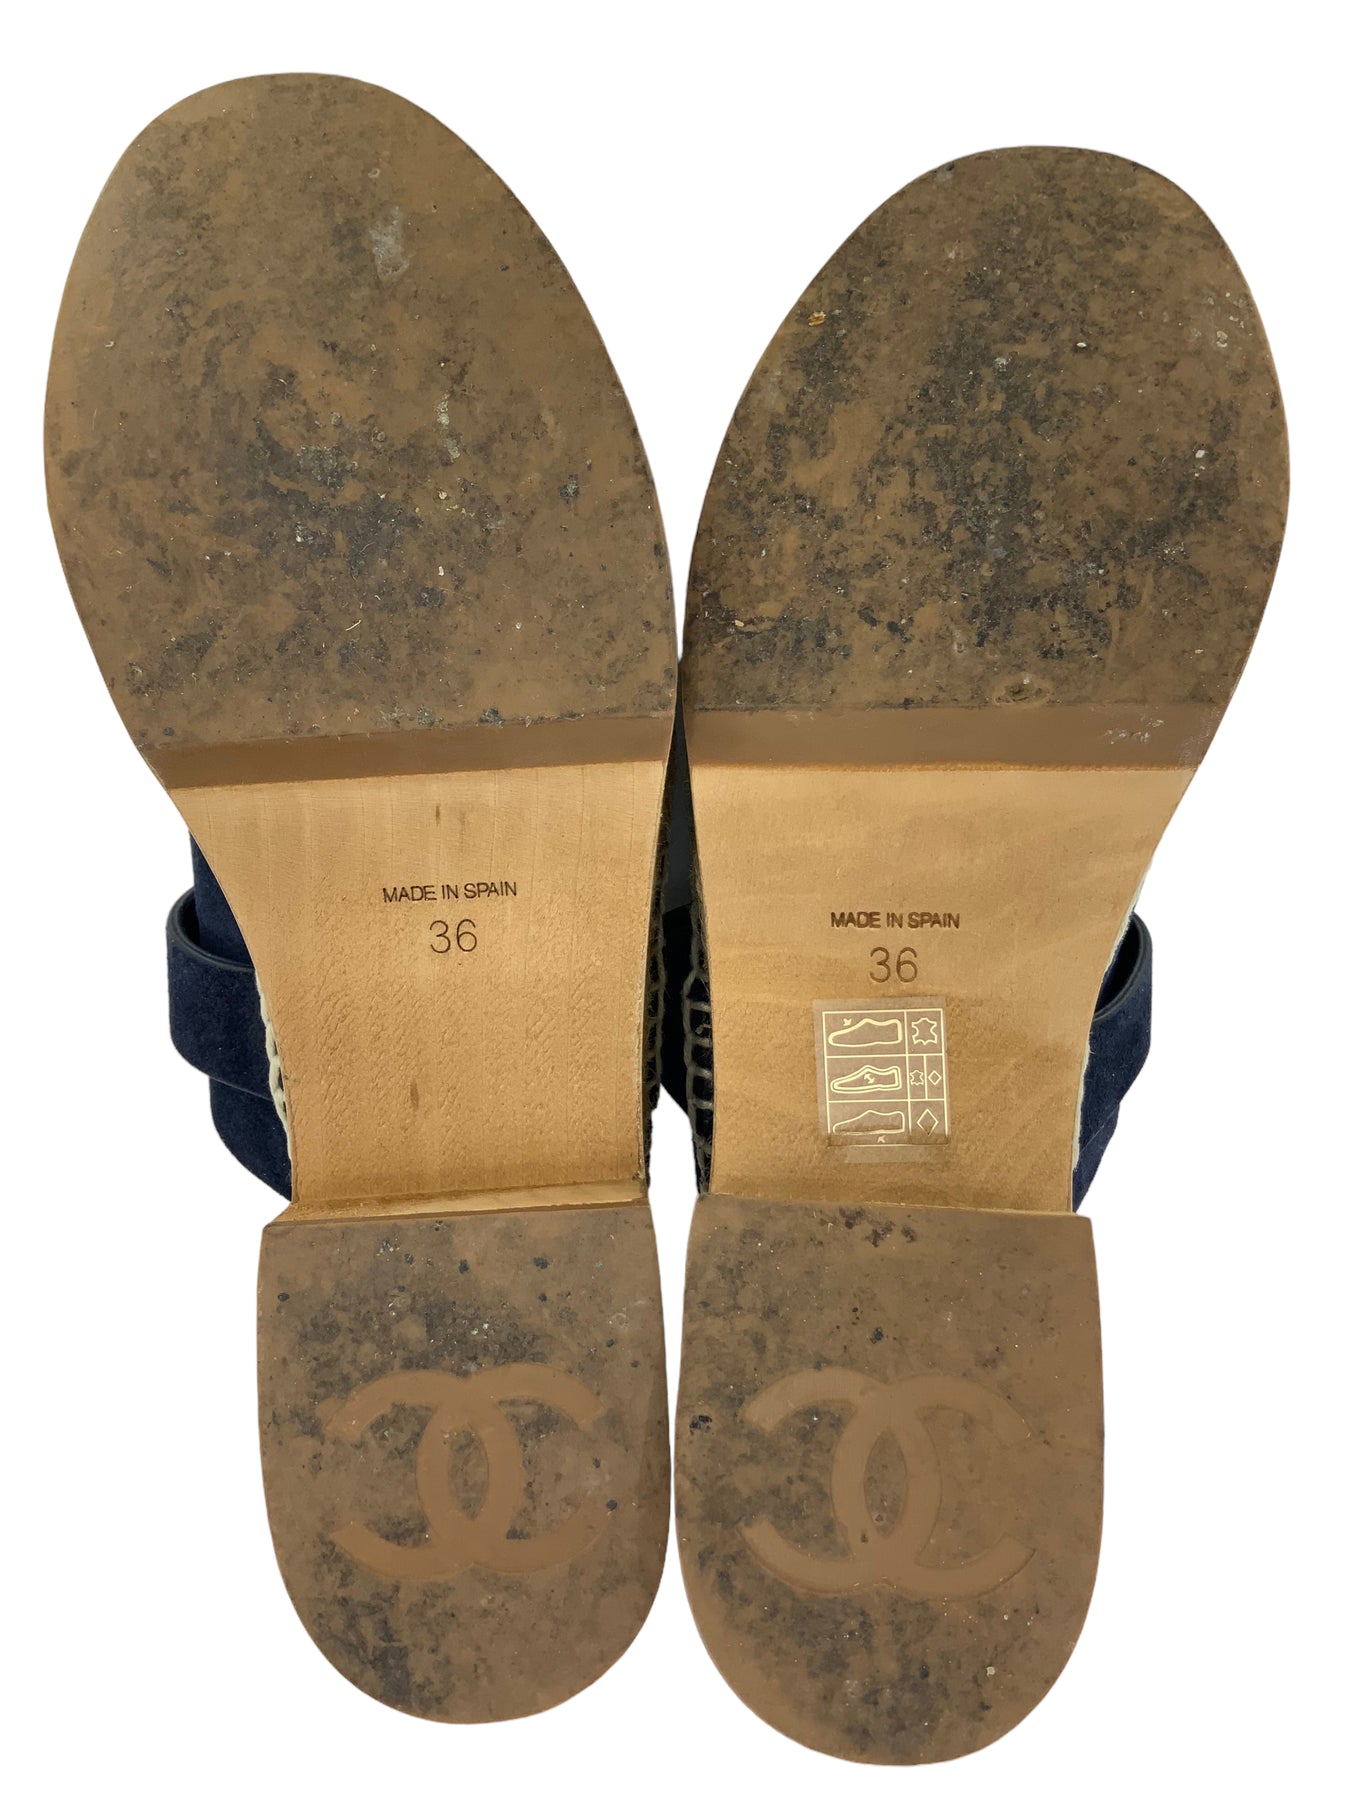 chanel shoes clogs size